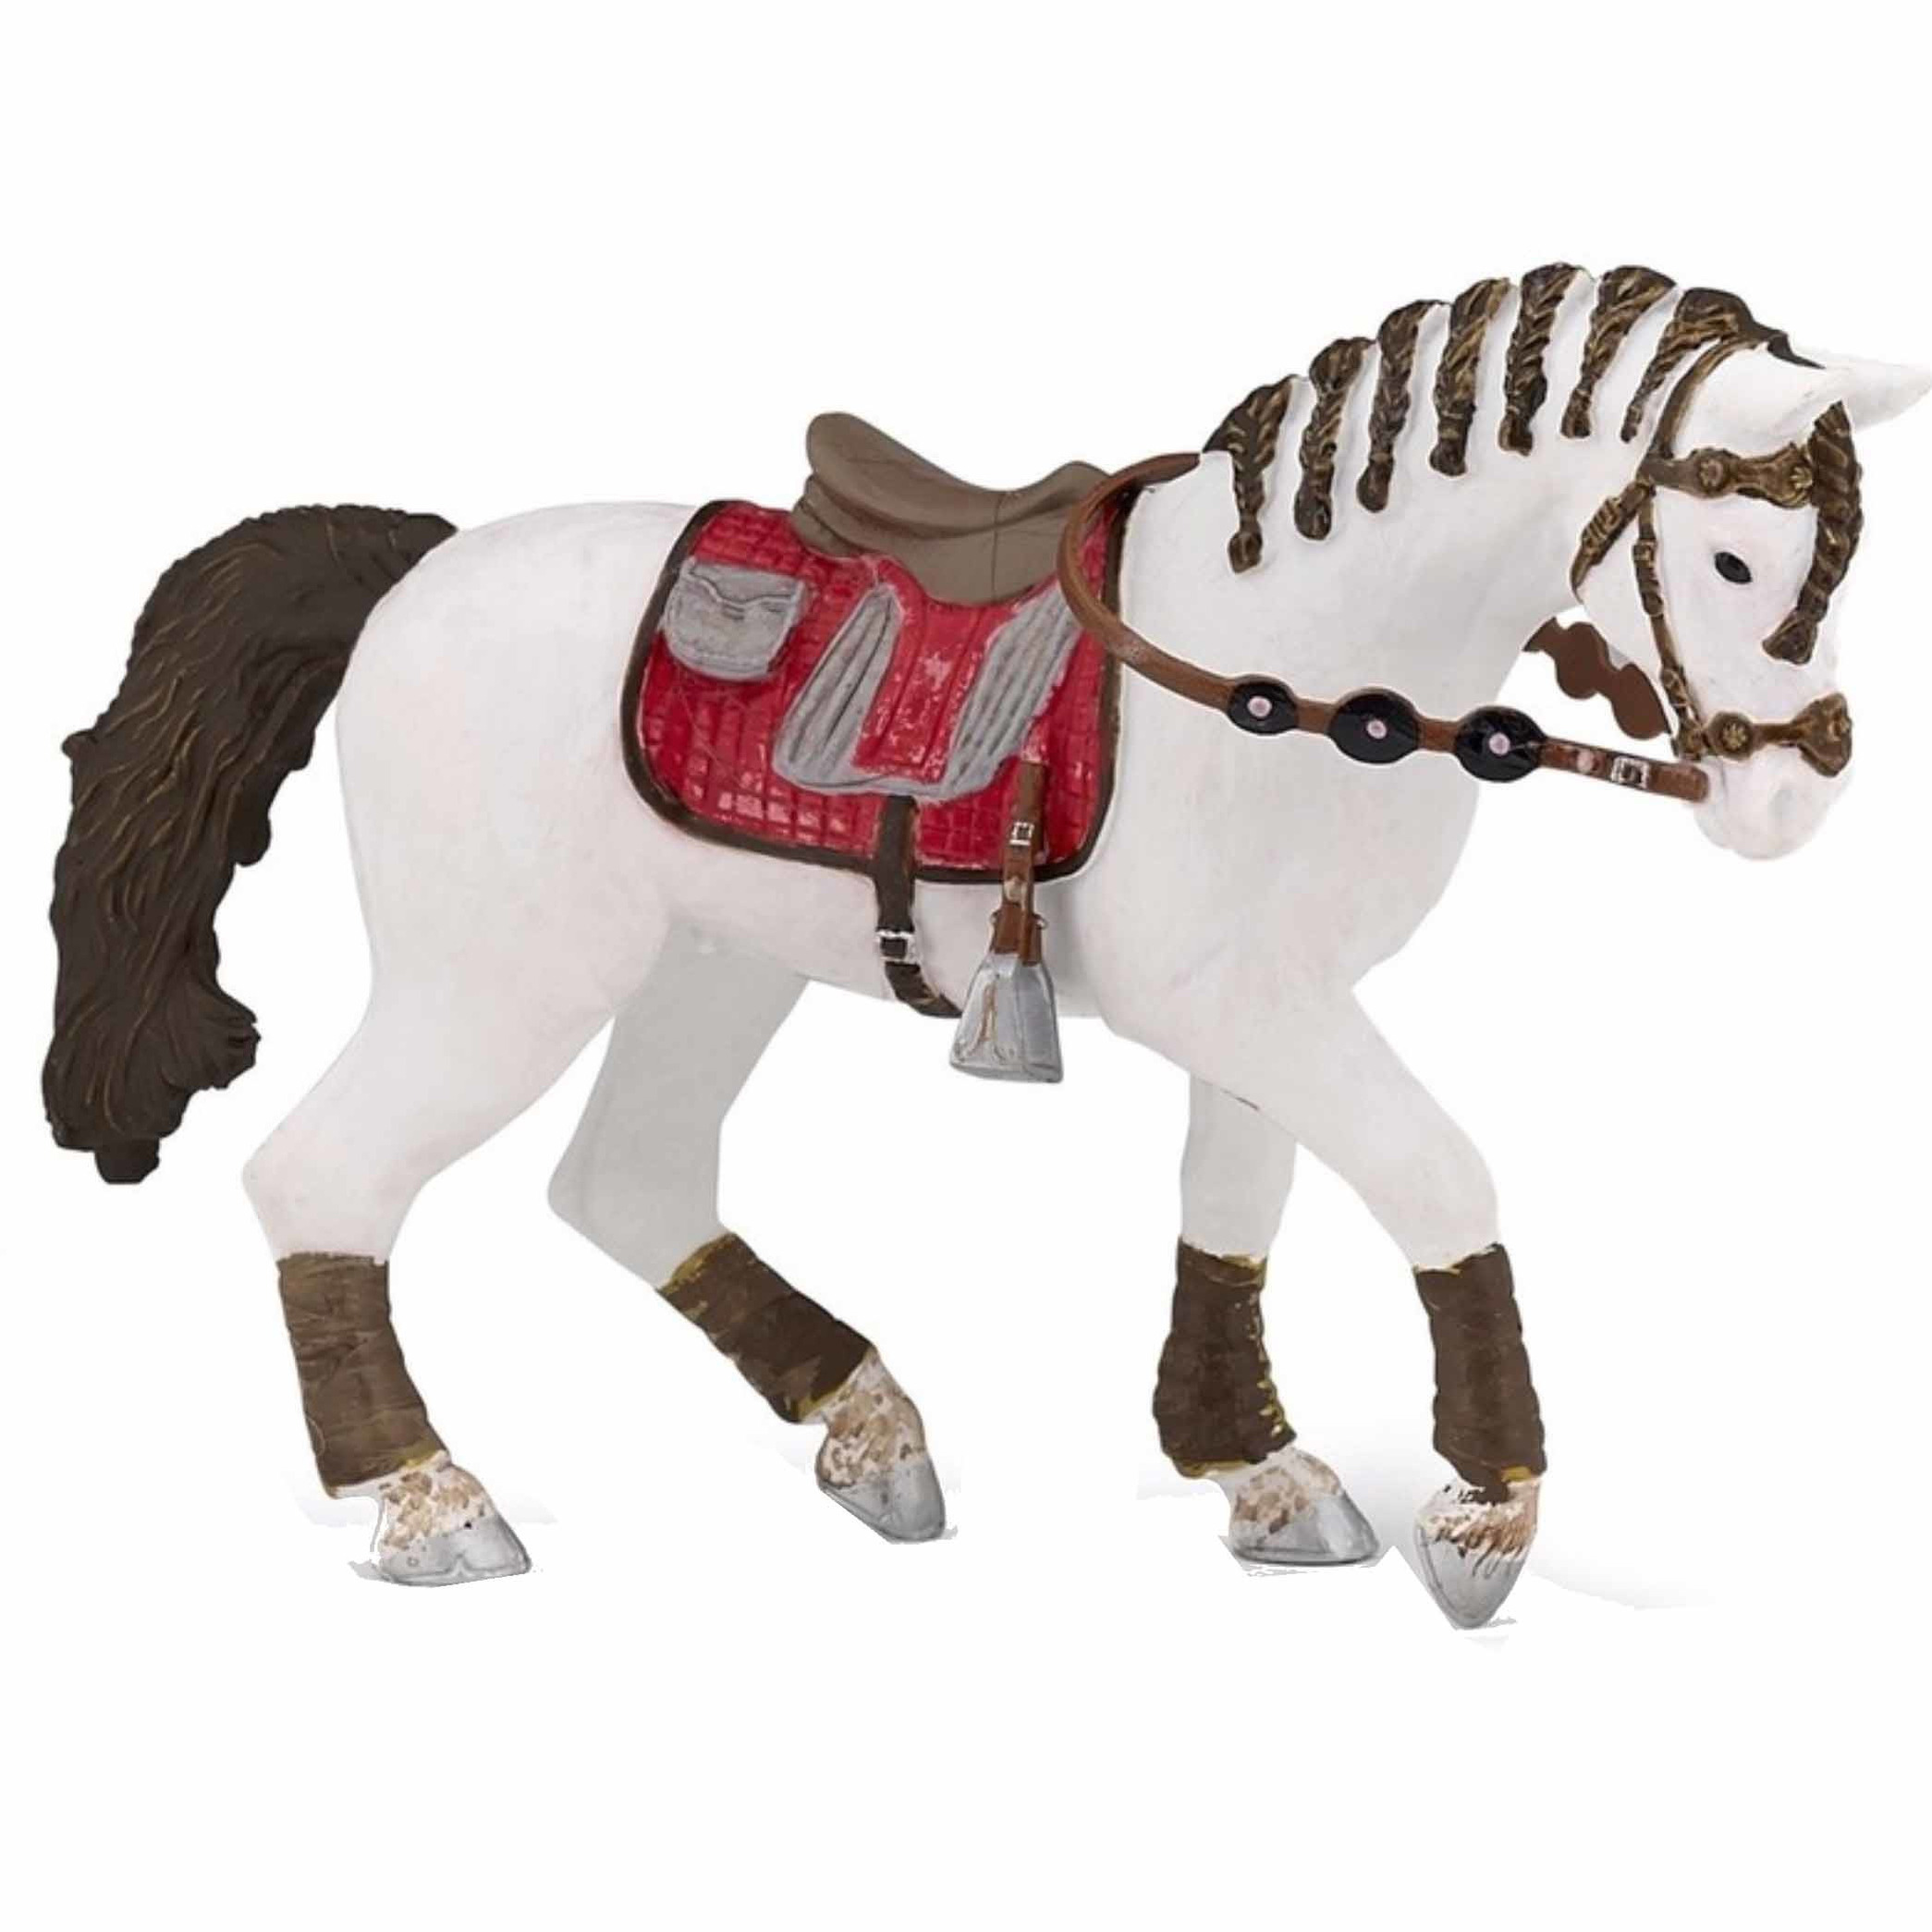 Plastic speelgoed figuur trendy paard 14.5 cm